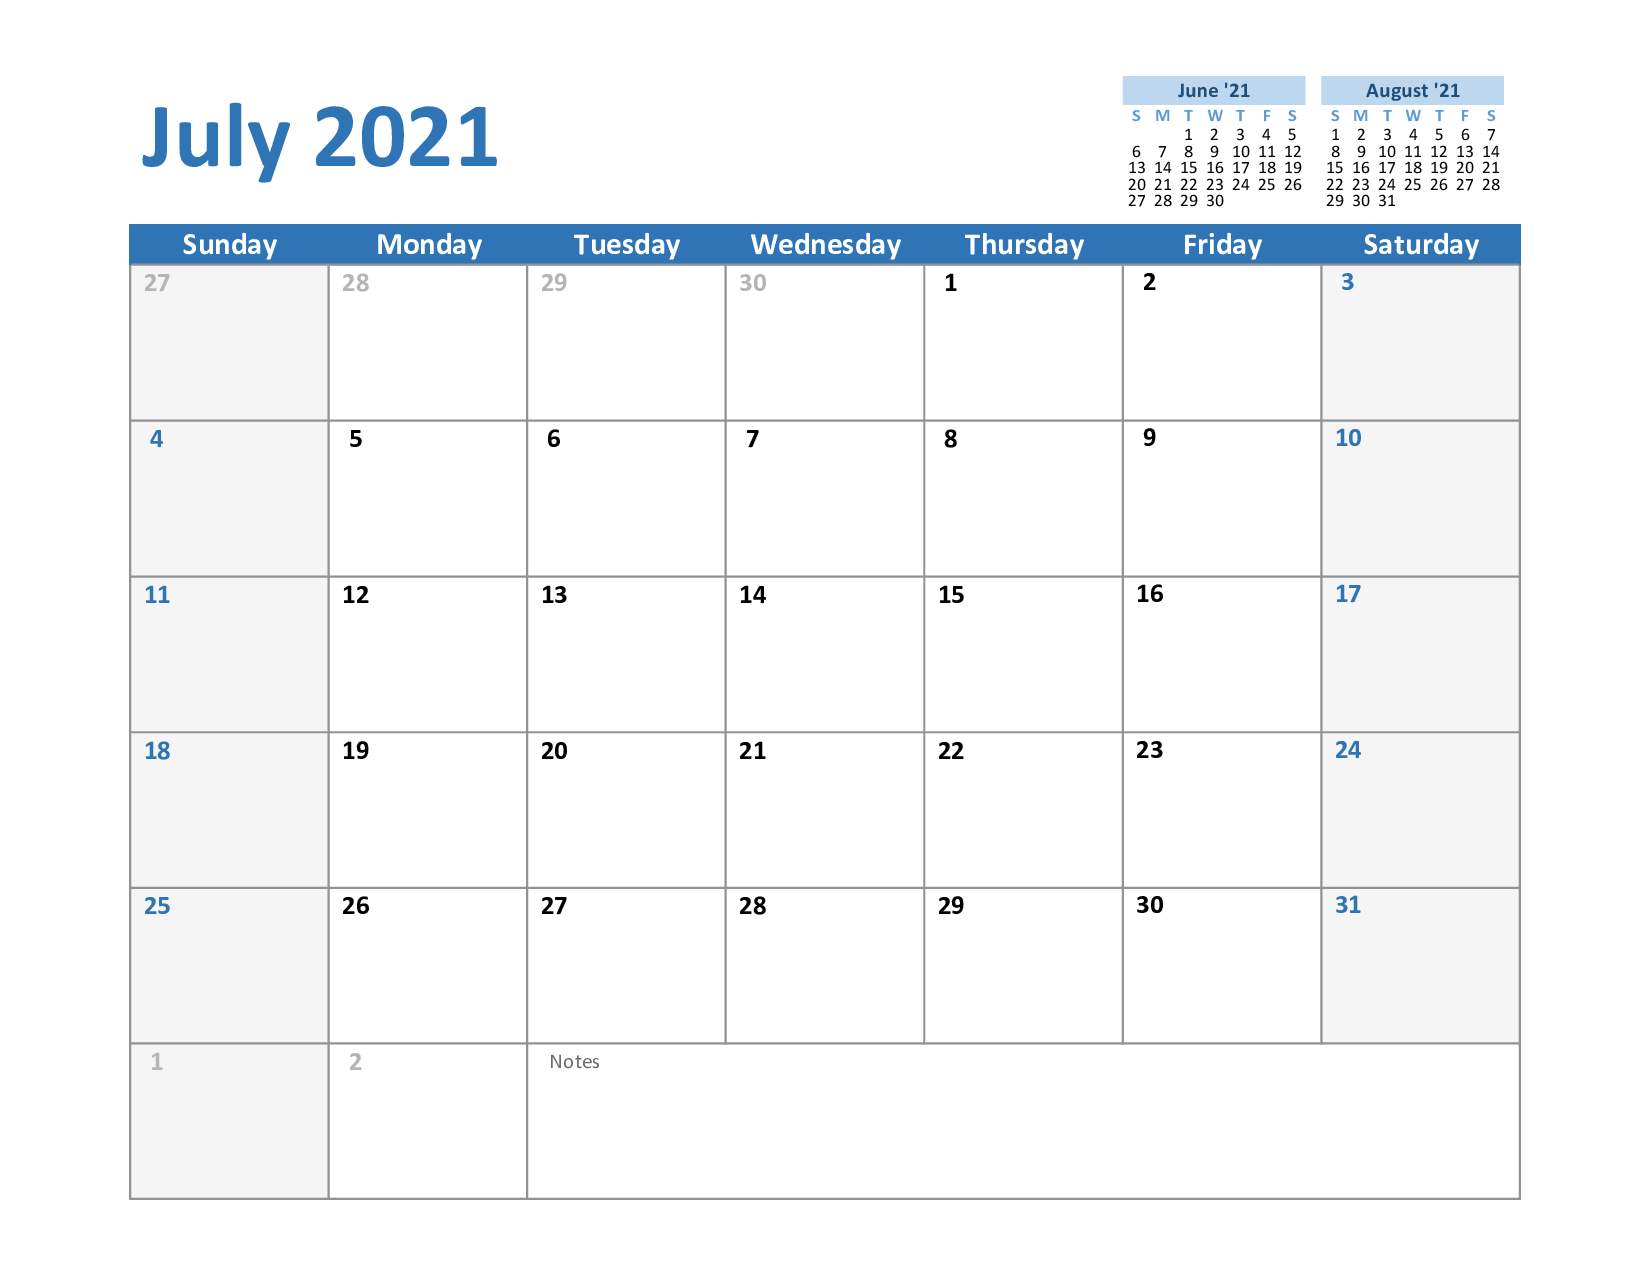 absentee-calendar-2021-calendar-template-printable